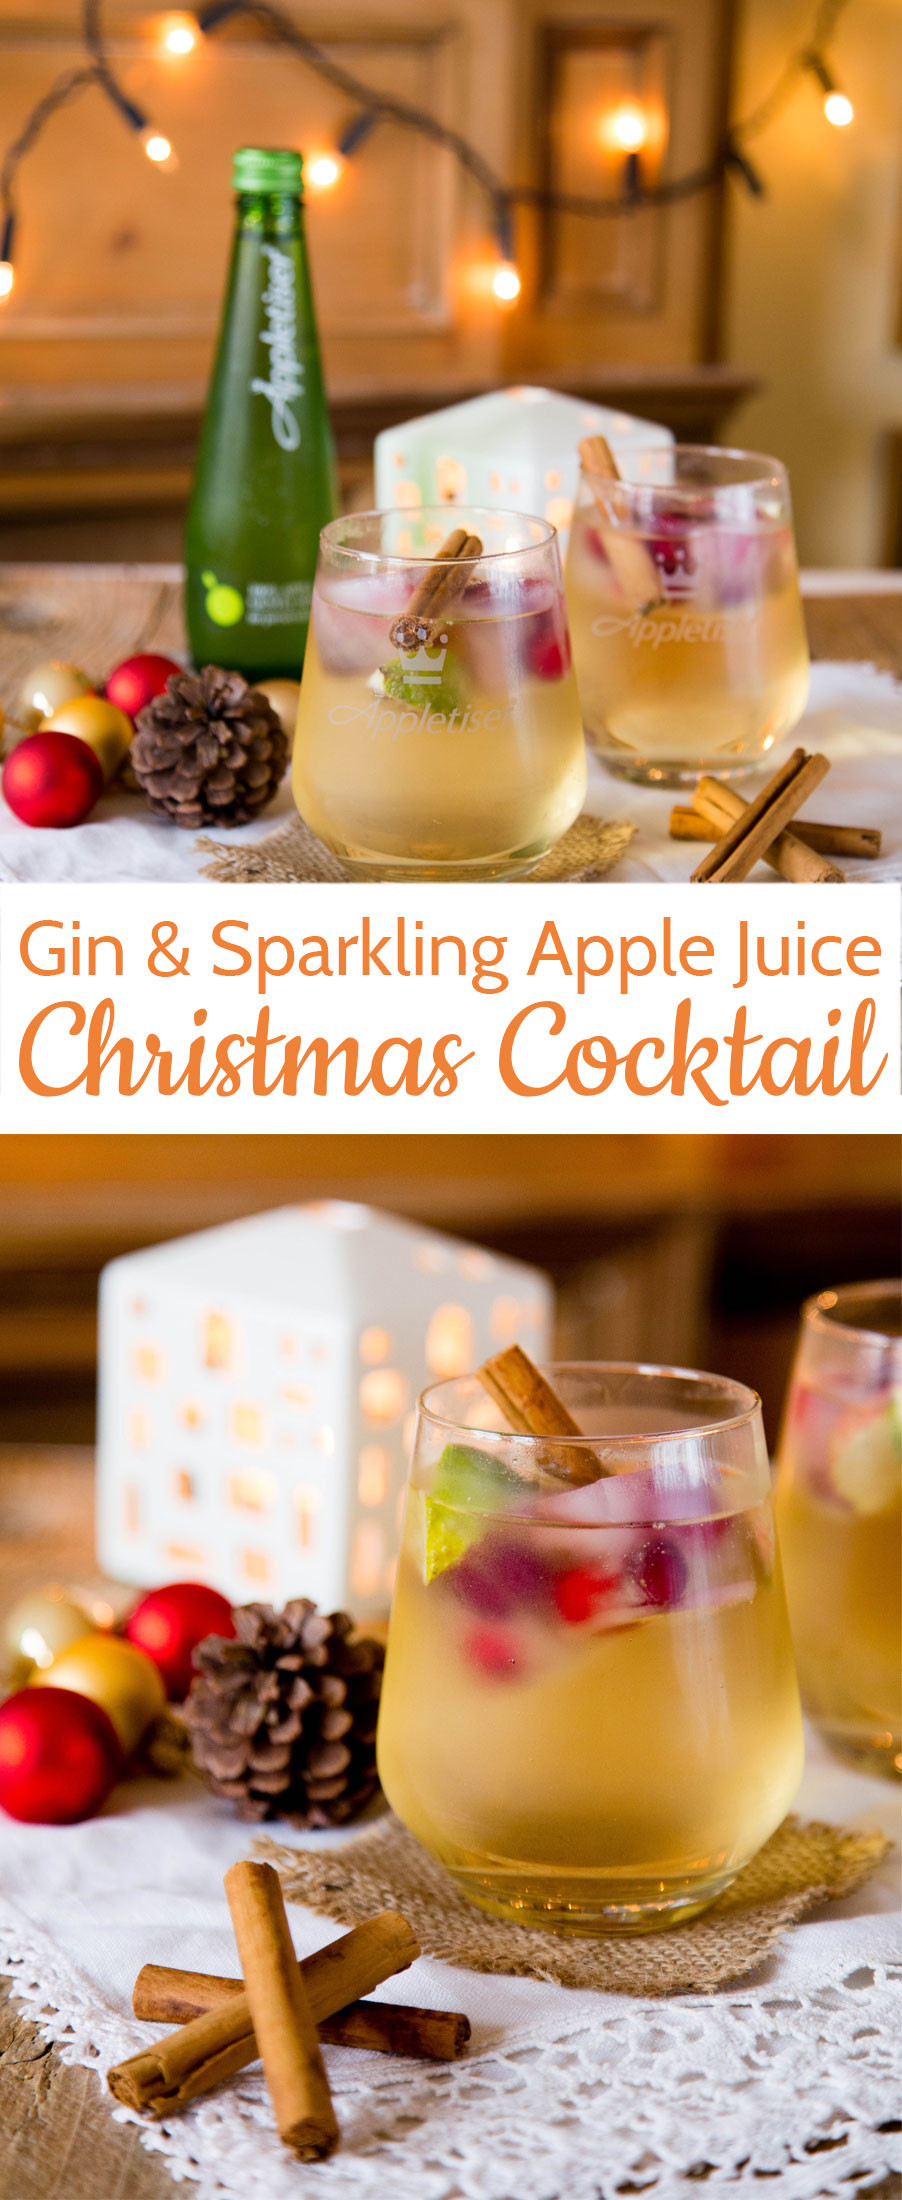 Christmas Gin Drinks
 Gin & Appletiser a refreshing Christmas Cocktail